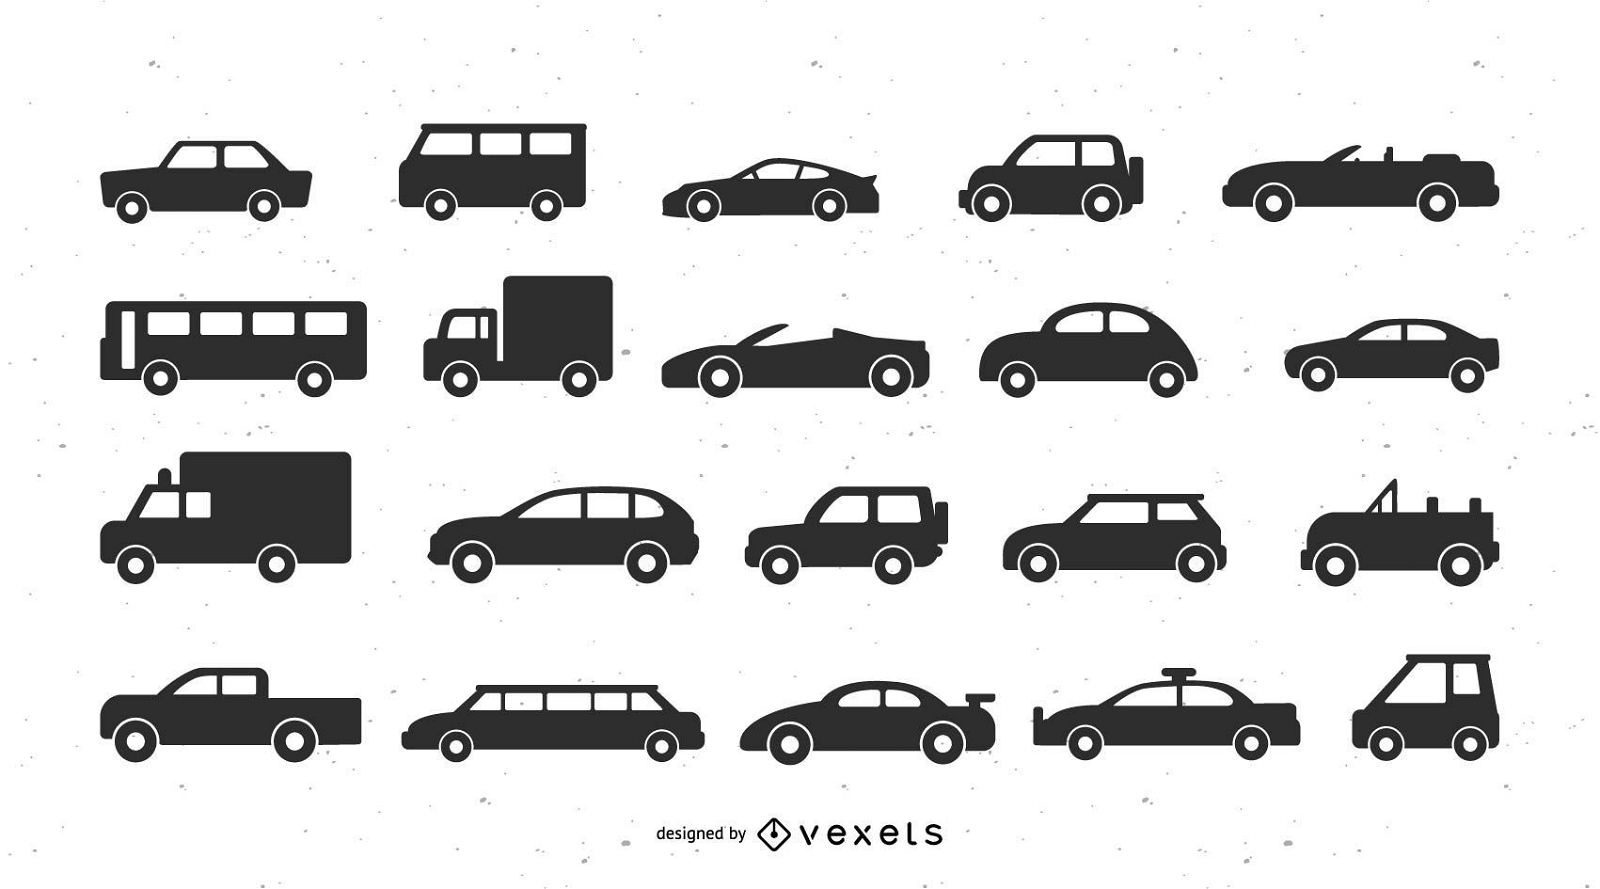 Vehicles silhouette icon set